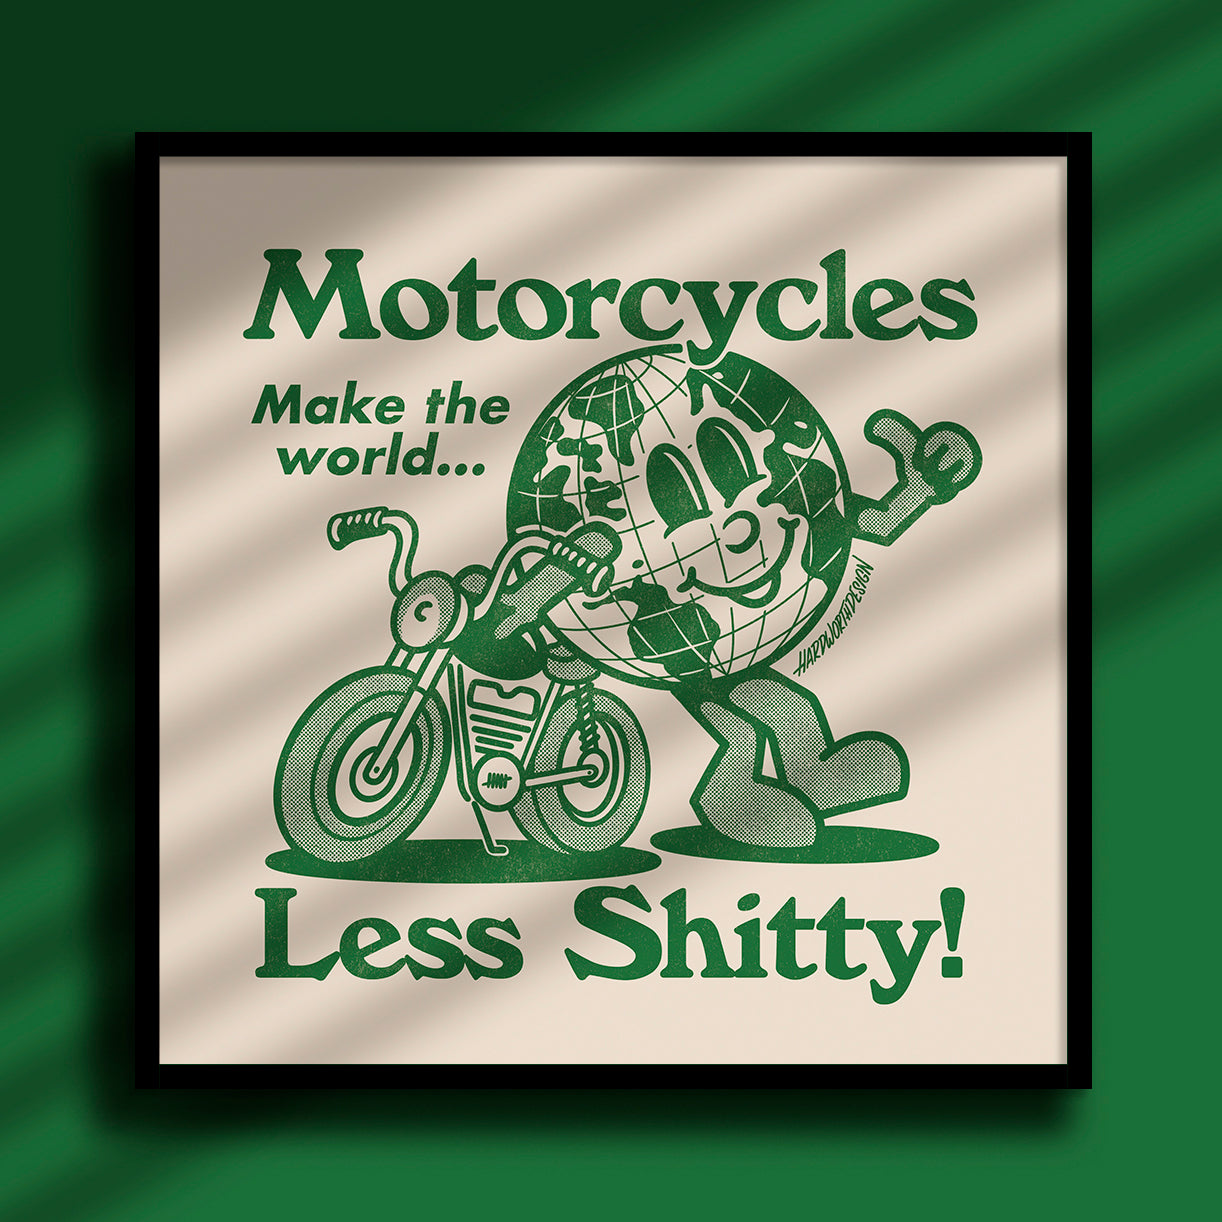 Motorcycles make the world less shitty! - Print